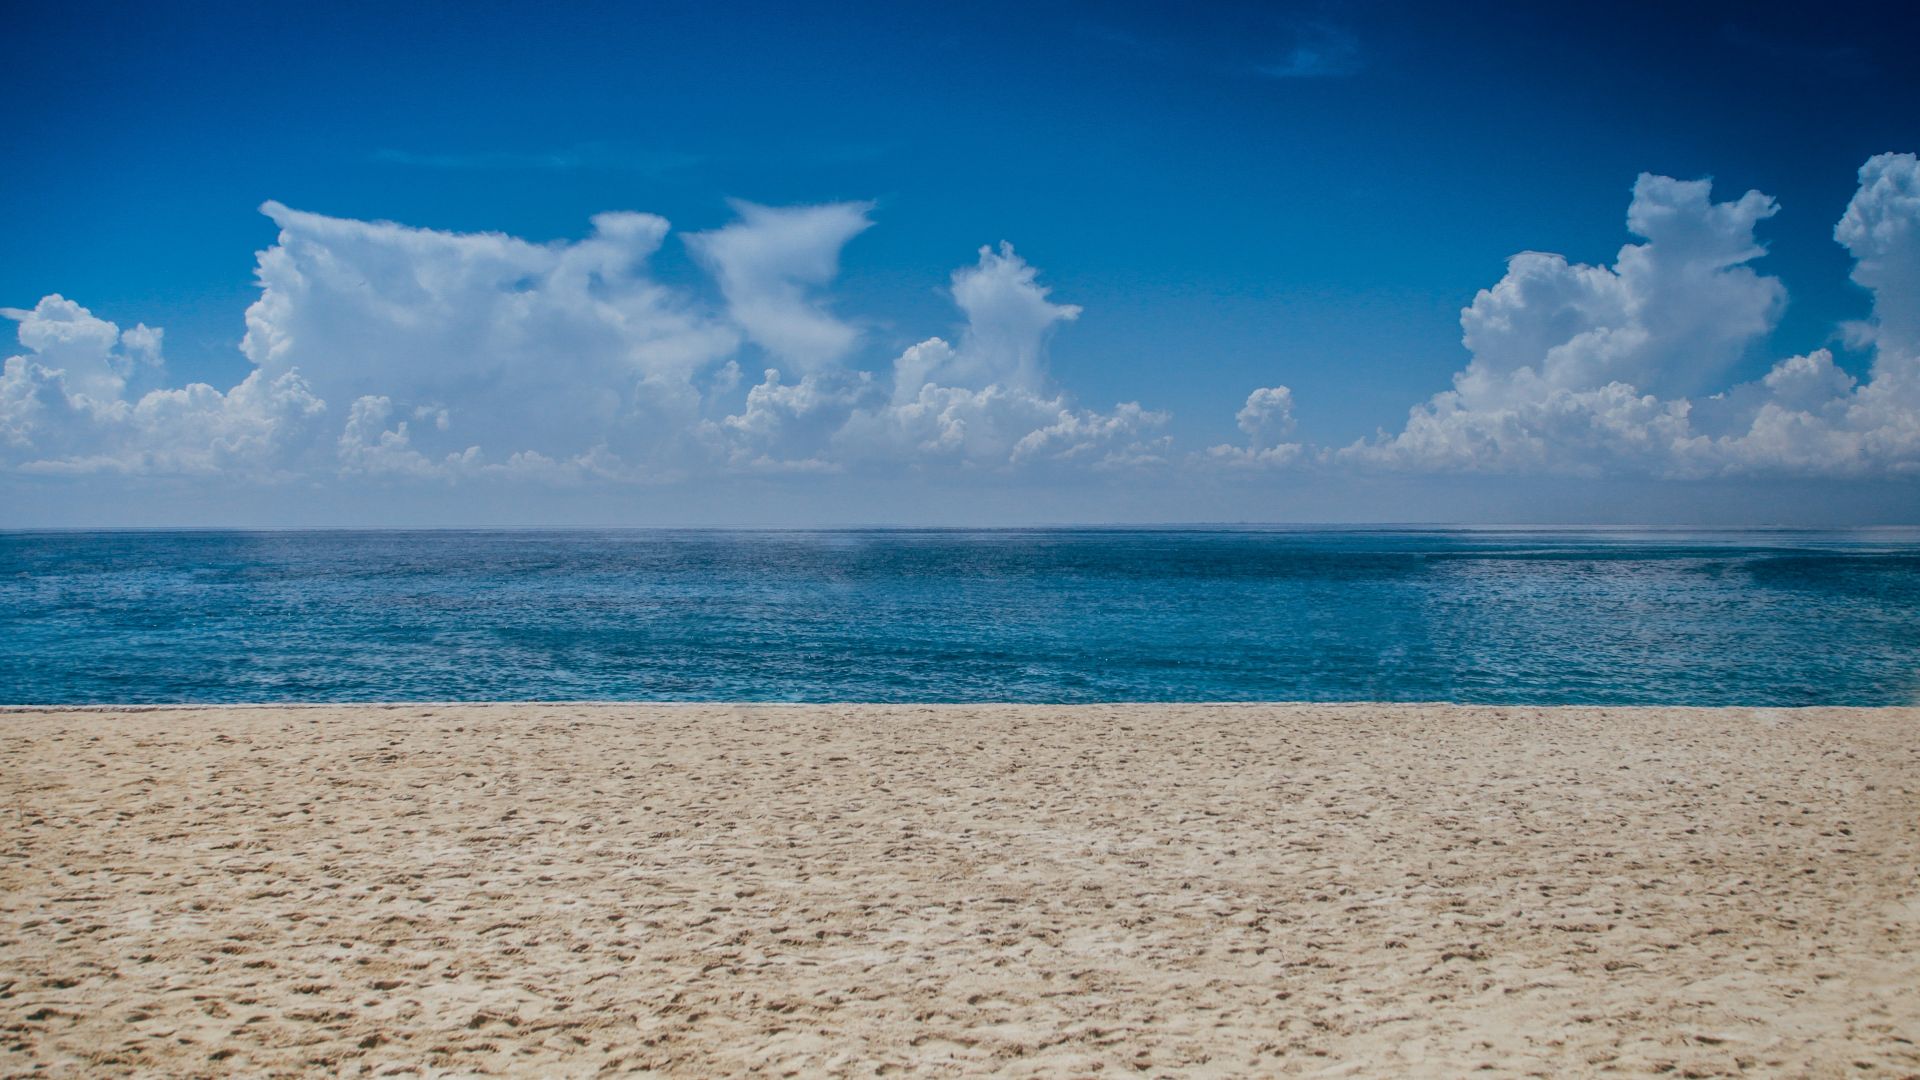 Desktop Wallpaper Beach, Blue Sea, Blue Skyline, Nature, Hd Image, Picture, Background, Qplx84